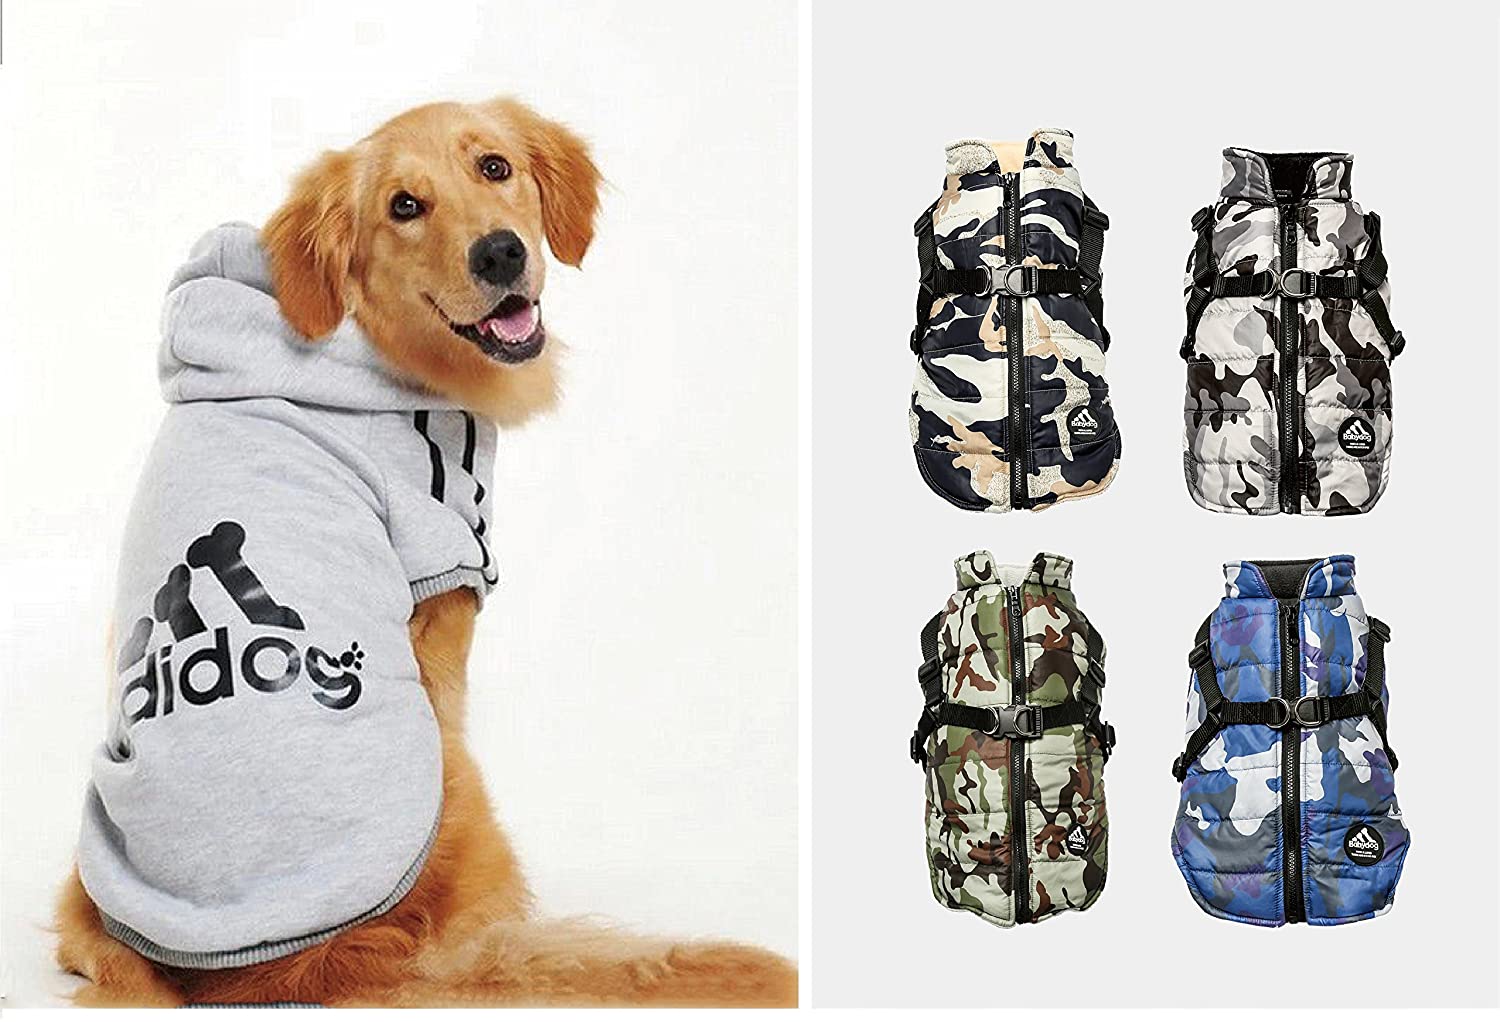  babydog Abrigo Ropa Camuflaje para Mascotas Perro Otoño e Invierno Caliente Chaleco Chaqueta Jacket (Beige, 7L) 